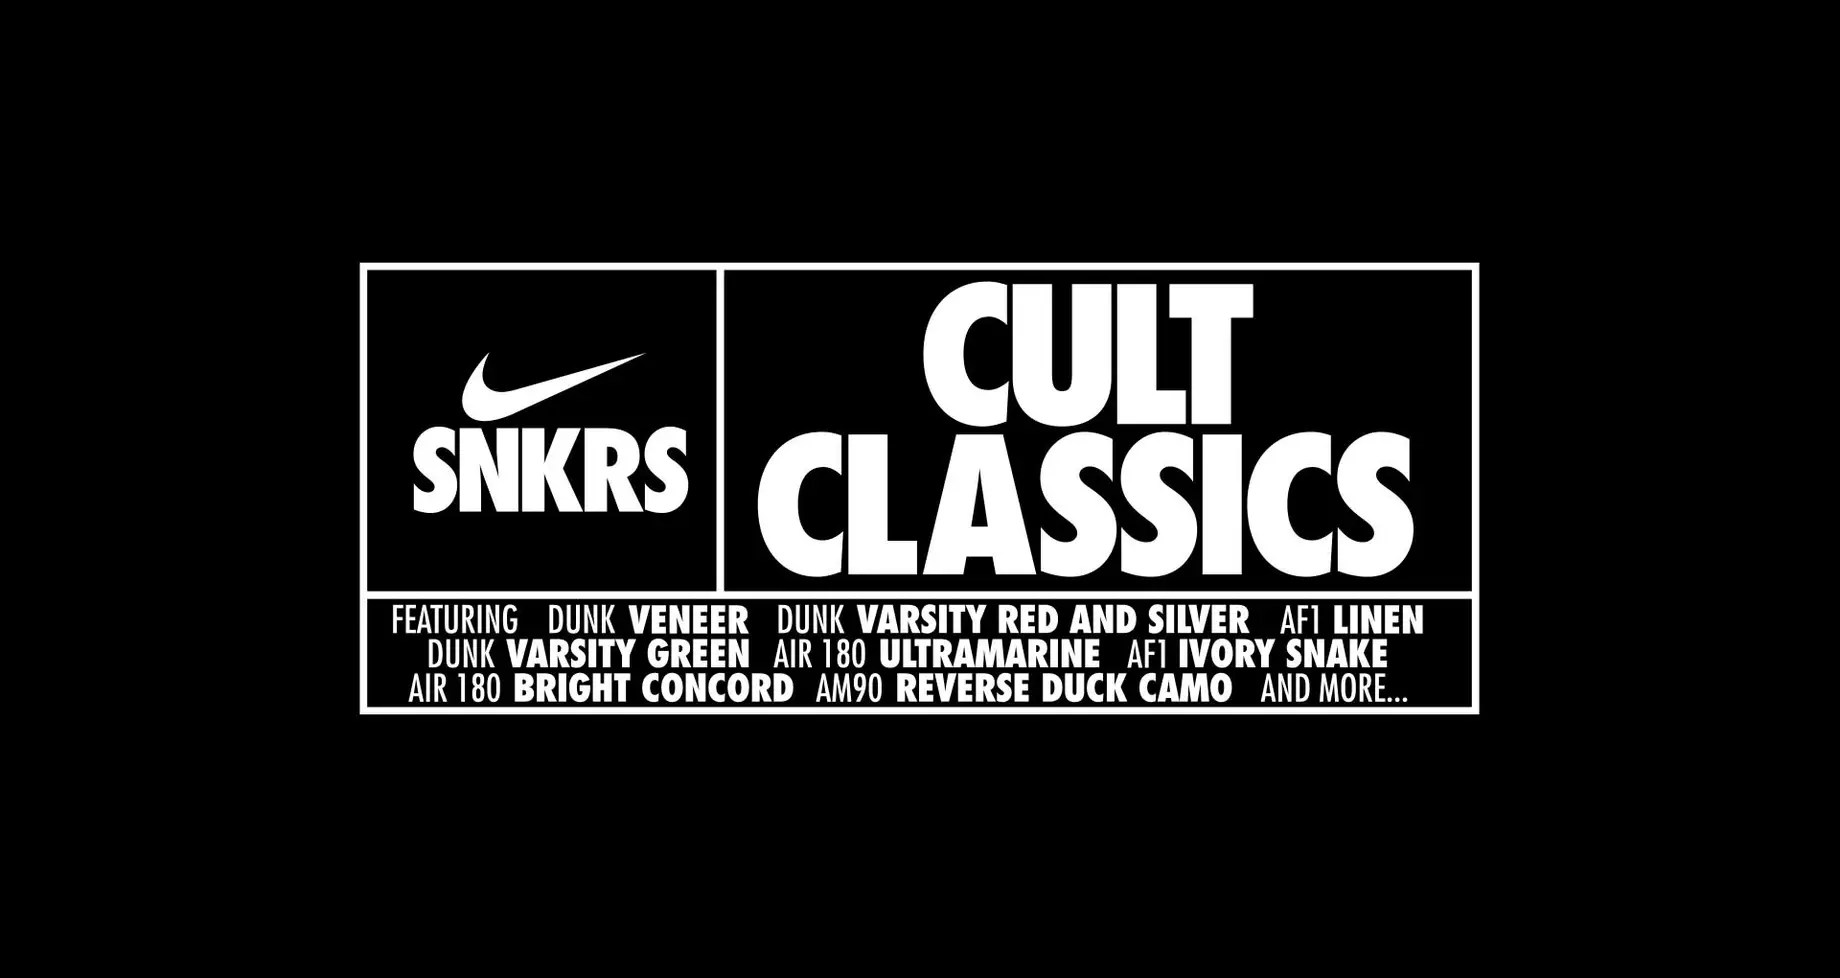 Nike Cult Classics Program